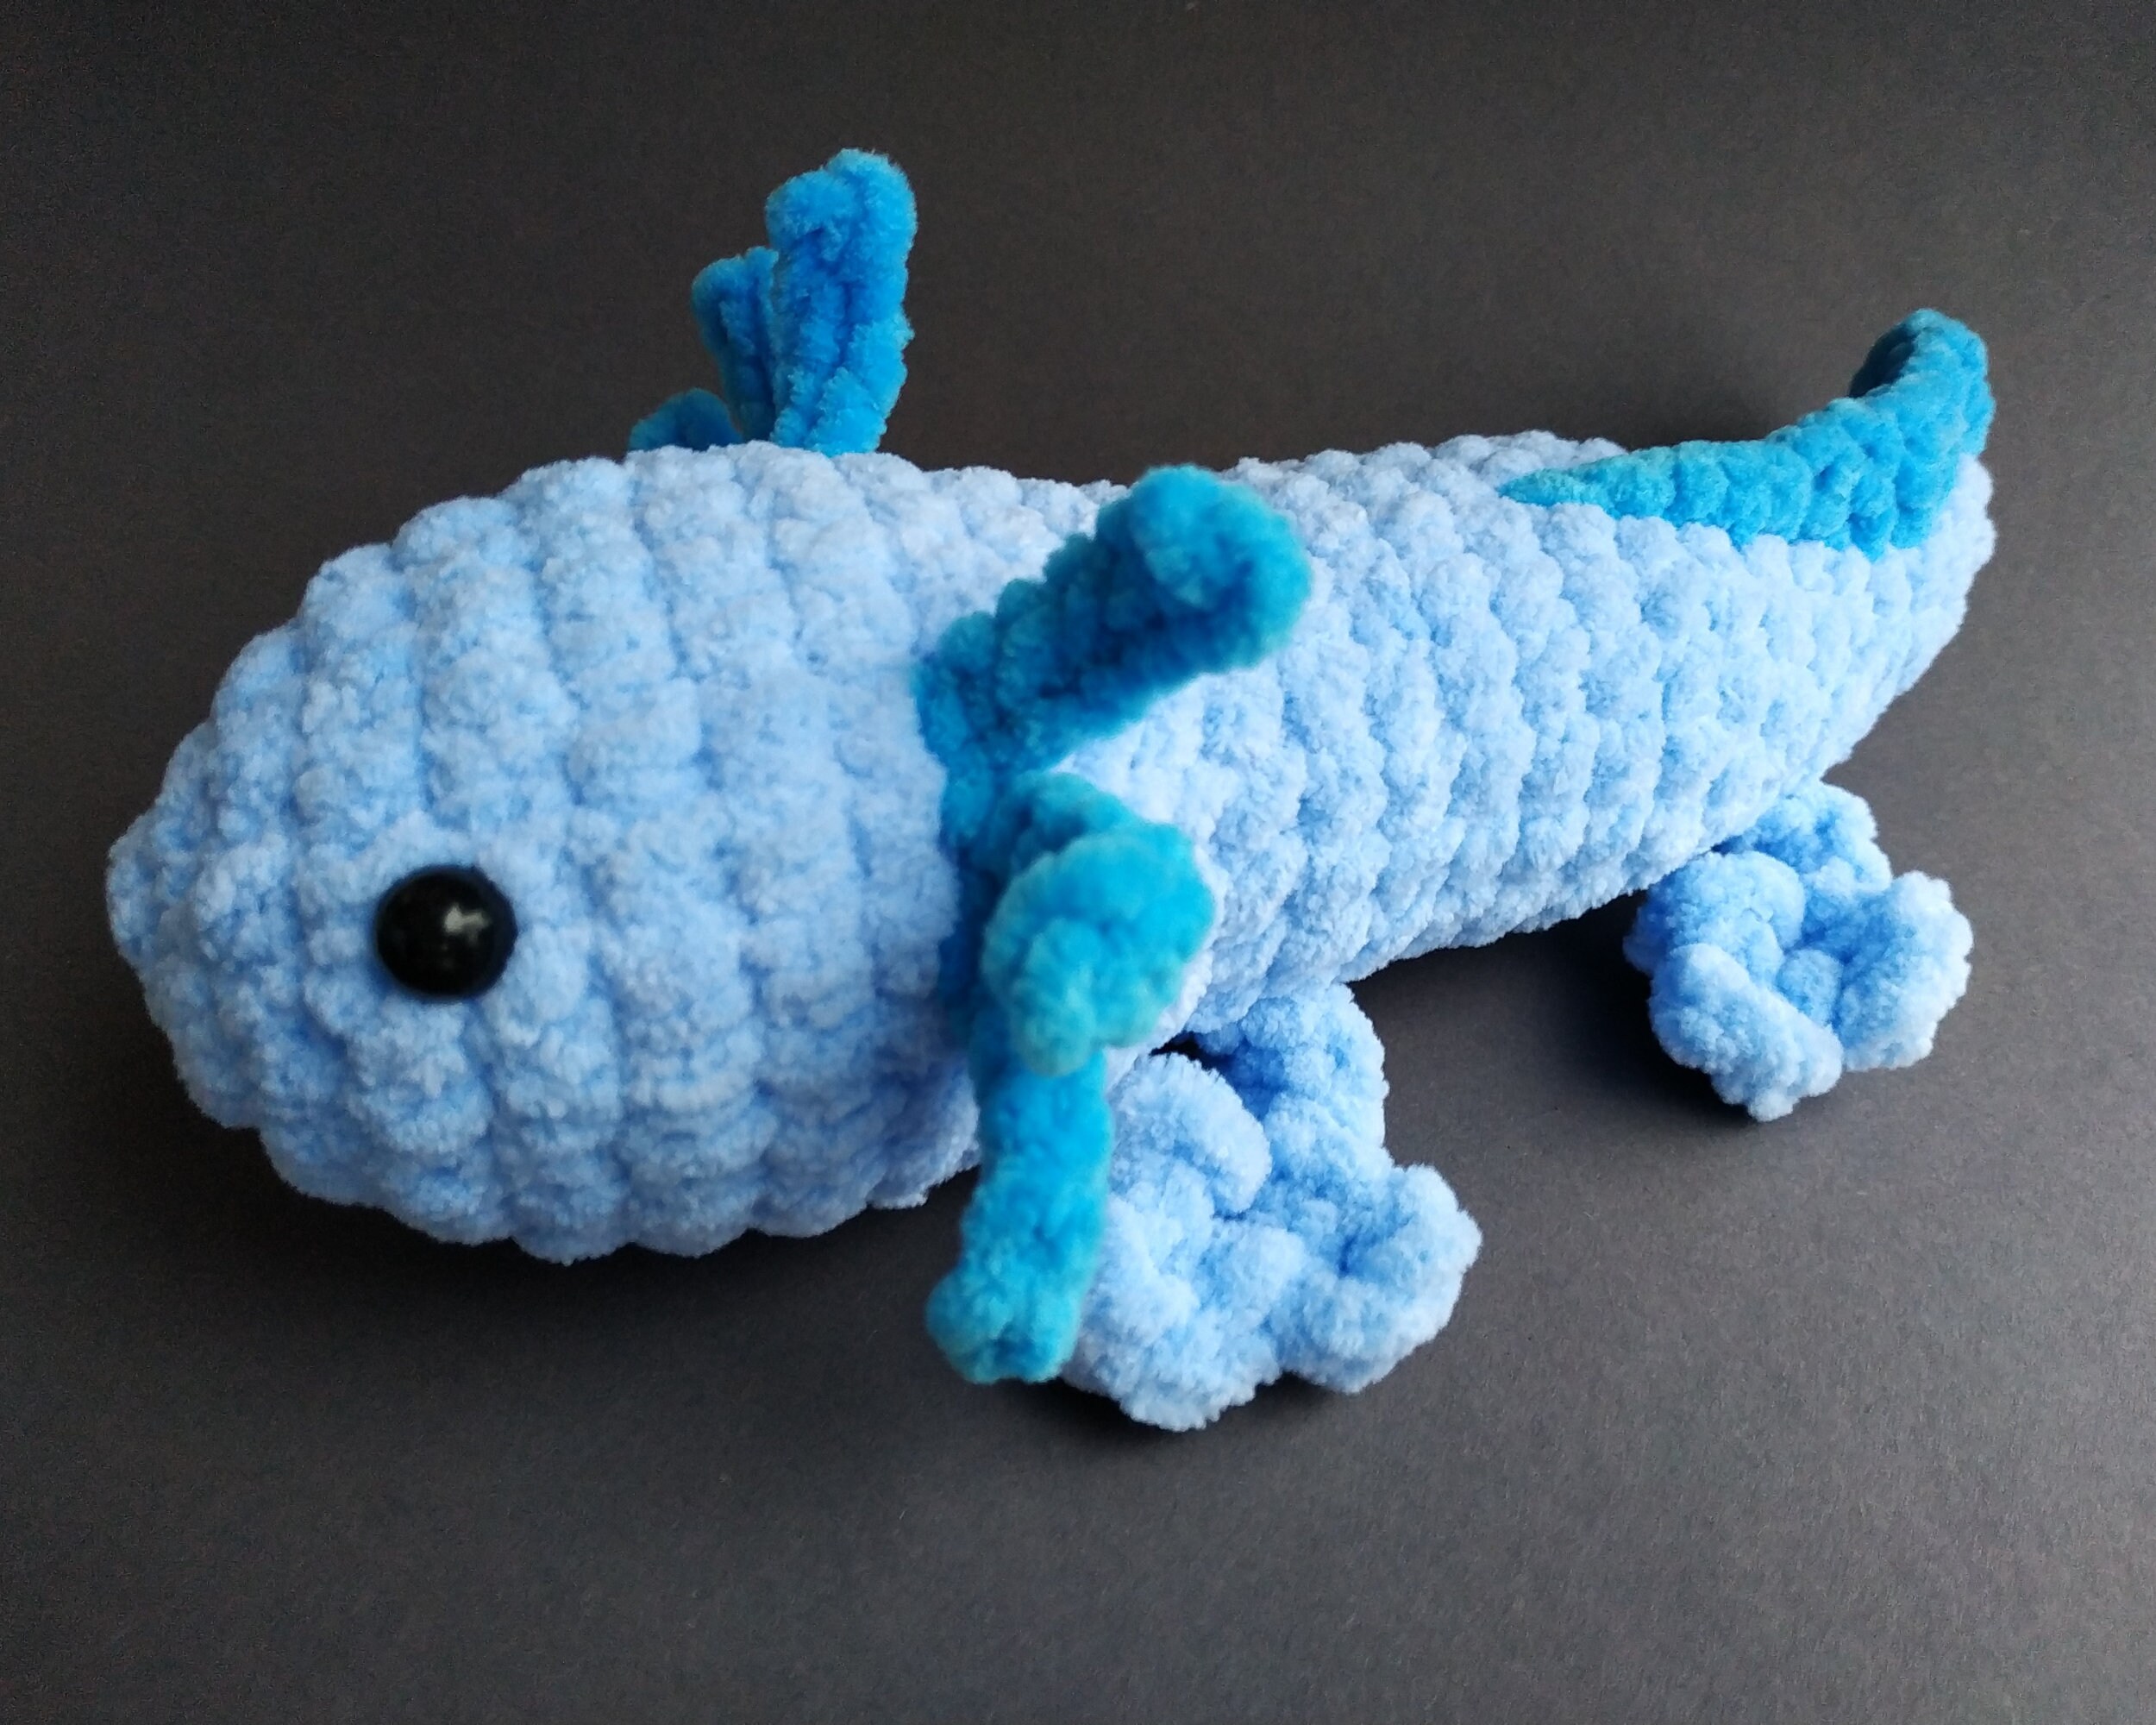  Axolotl Plushie Toy / Crochet Axolotl / Endangered animals /  Water monster Amigurumi / Gifts for kids / Little plush Axolotls/ Stuffed  animal / Custom color toys / Mexican Salamander / Plushie Dragon : Handmade  Products